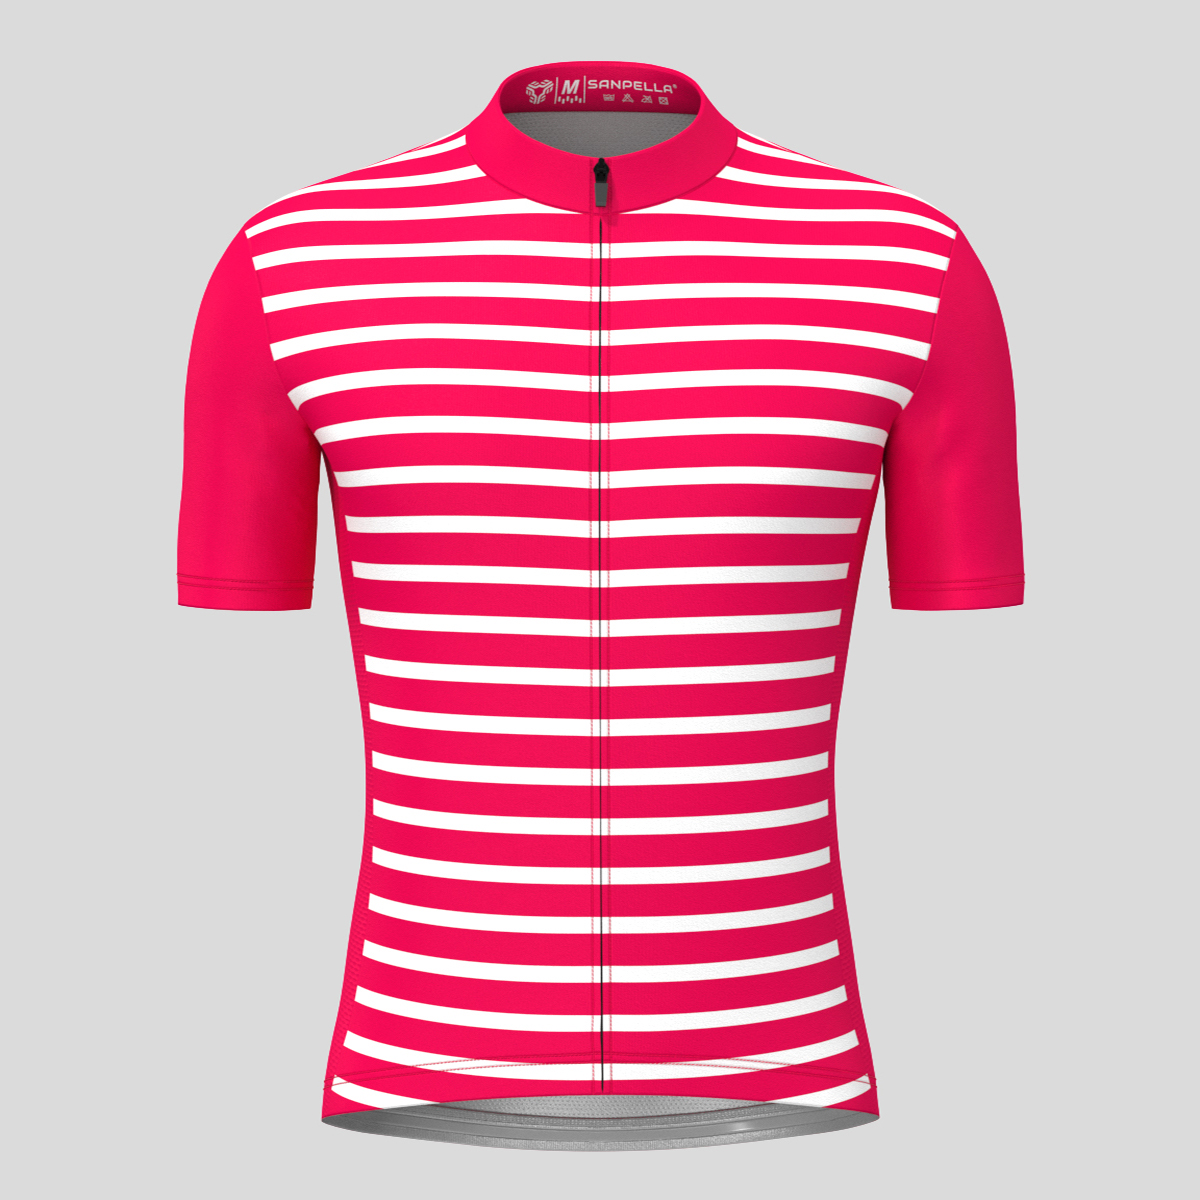 Minimal Stripes Men's Cycling Jersey - Jester Red